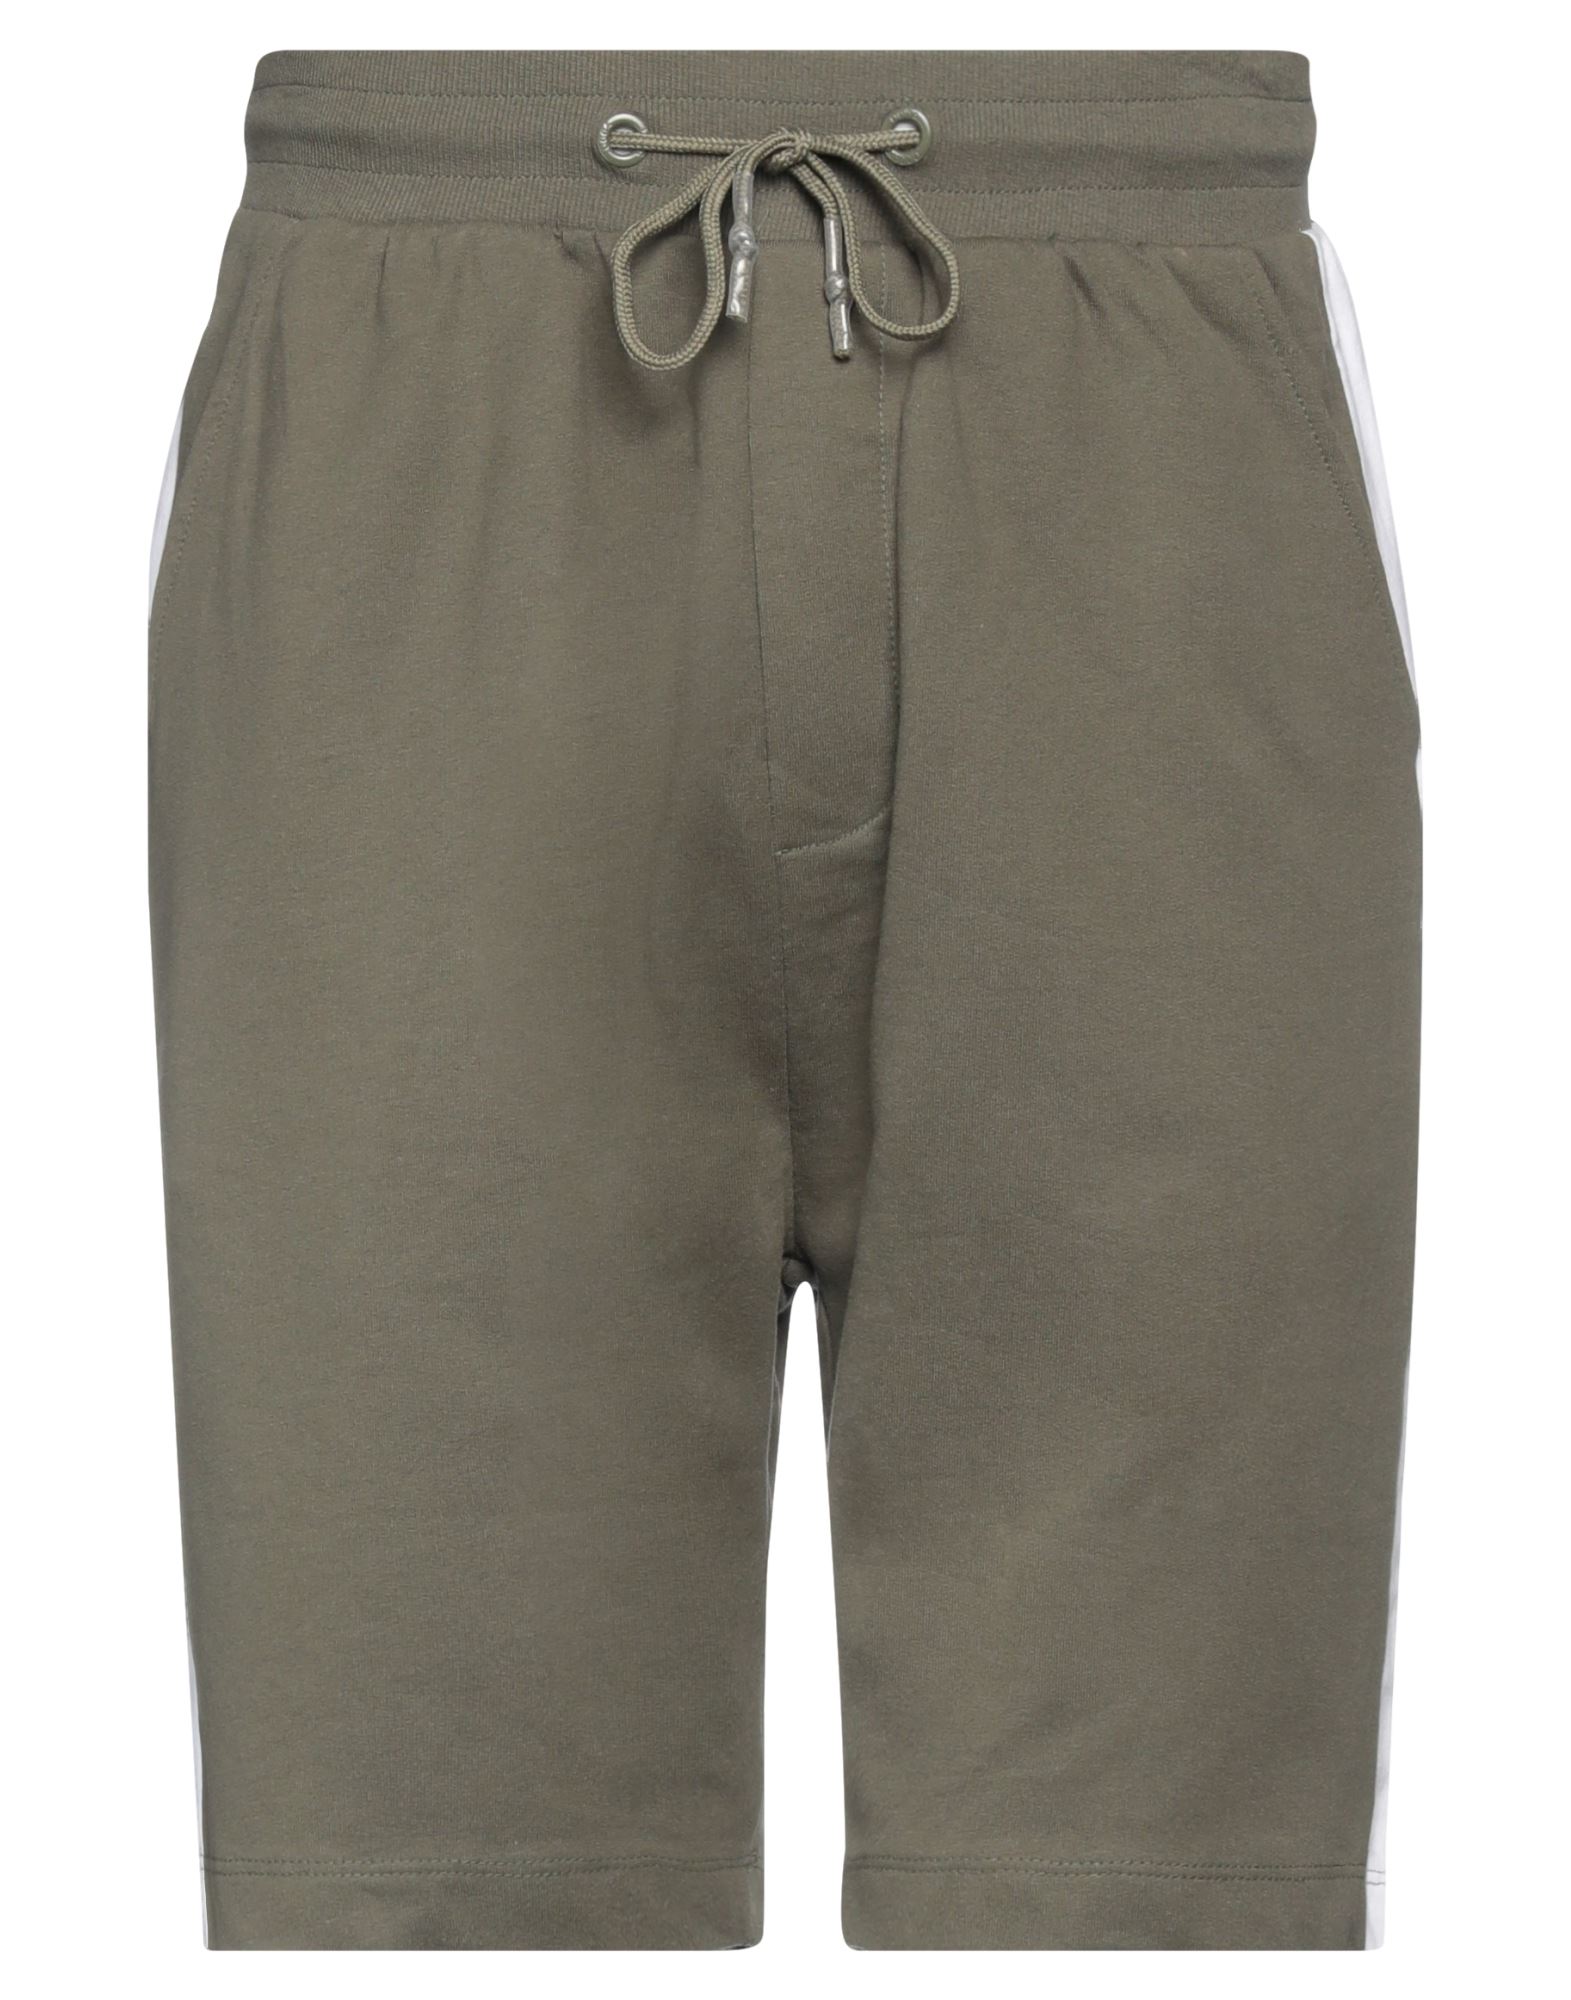 Dooa Man Shorts & Bermuda Shorts Military Green Size Xxl Cotton